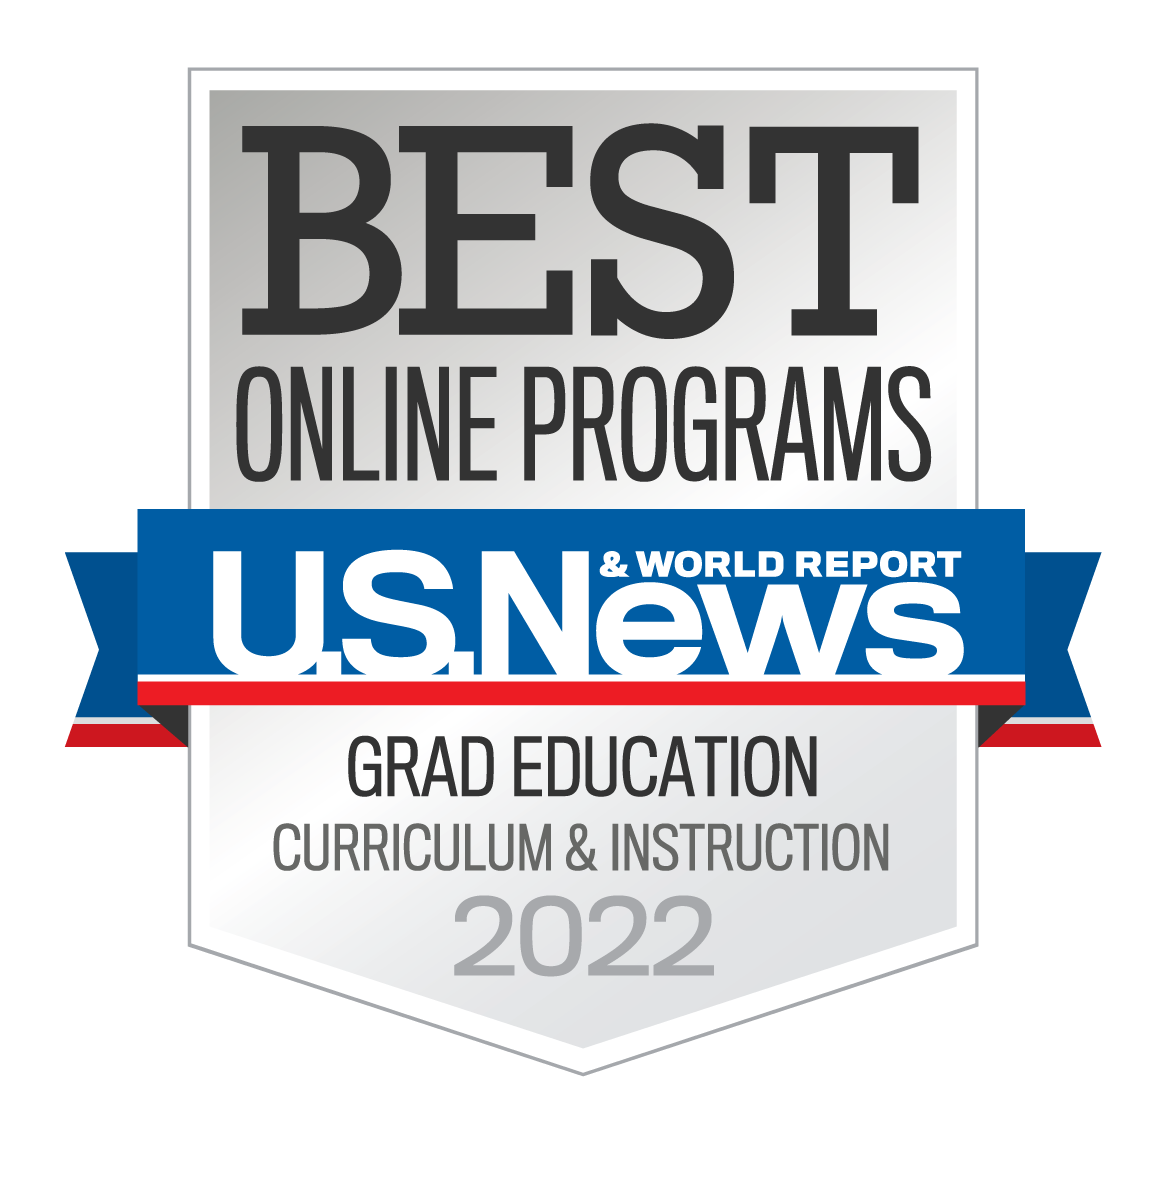 Best Online Programs for Graduate Education by U.S. News